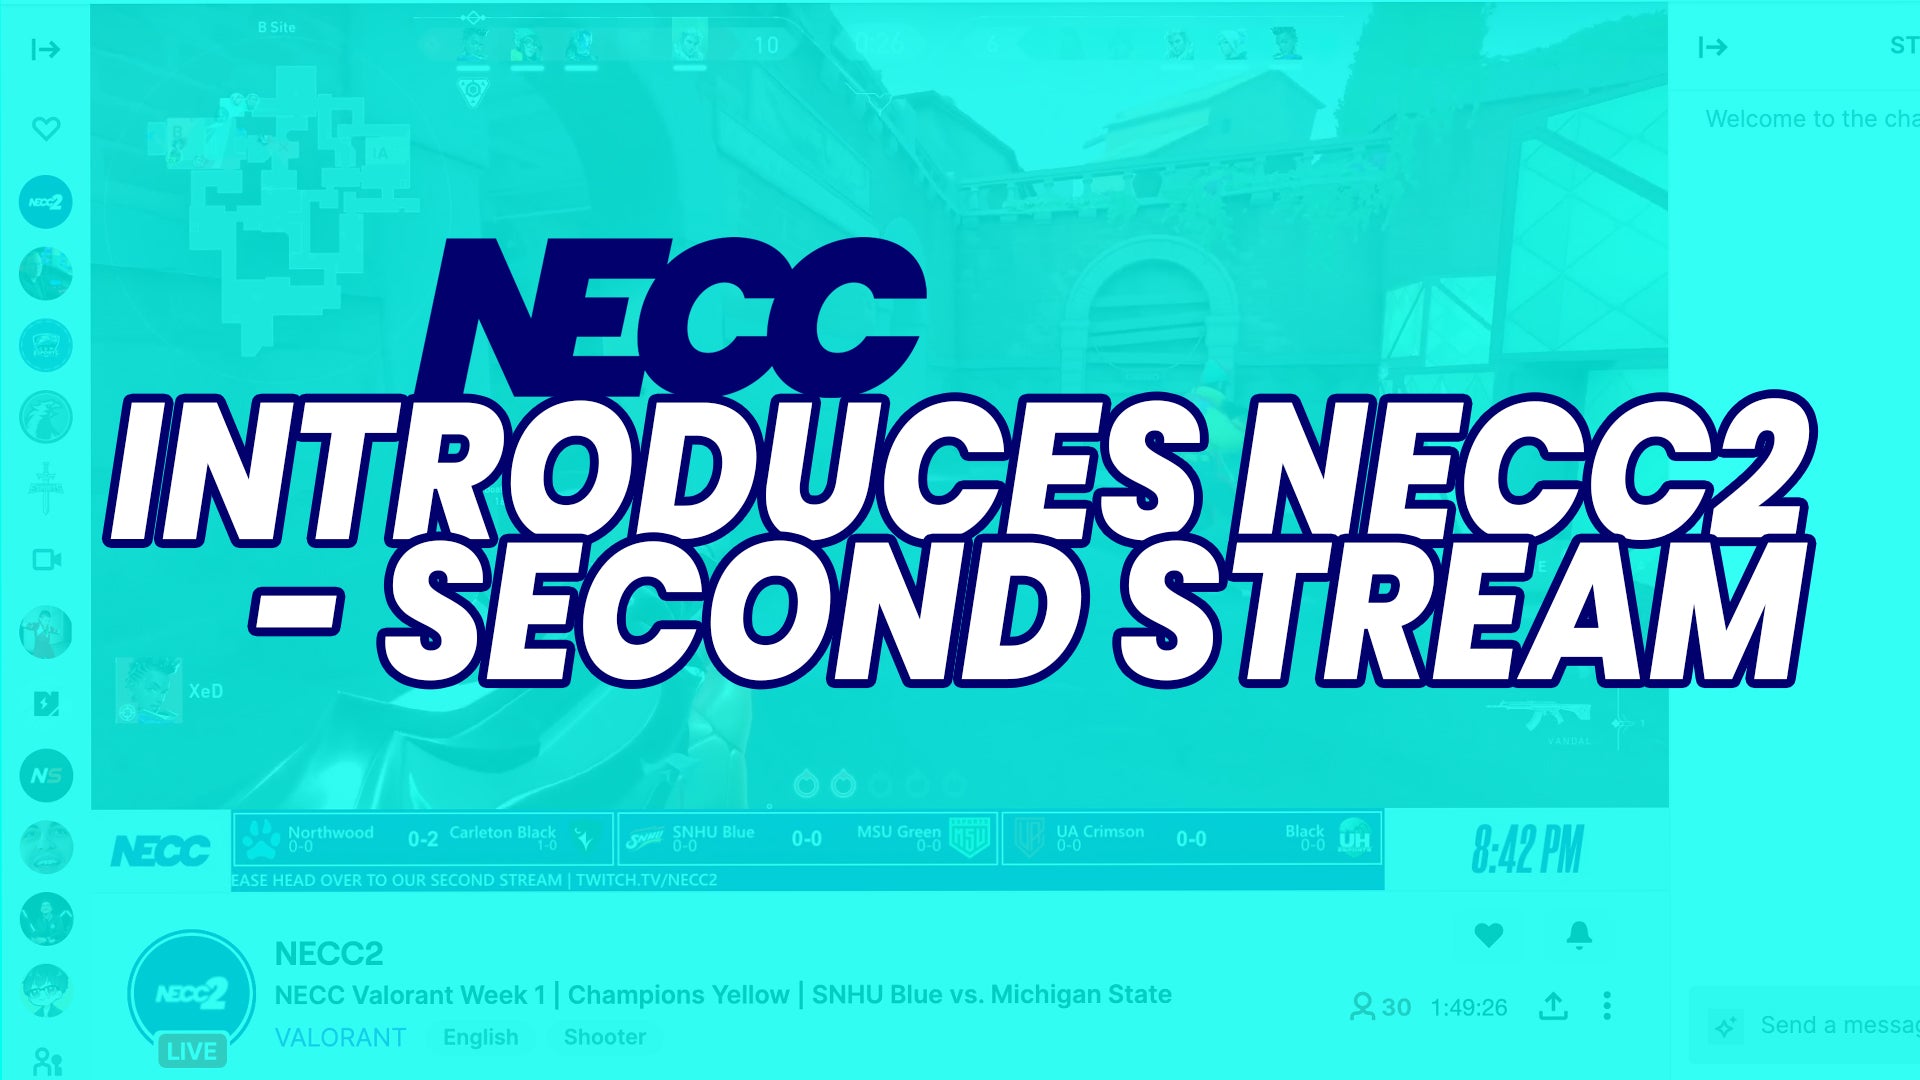 NECC Introduces NECC2, the Conference's Second Stream for Spring Semester